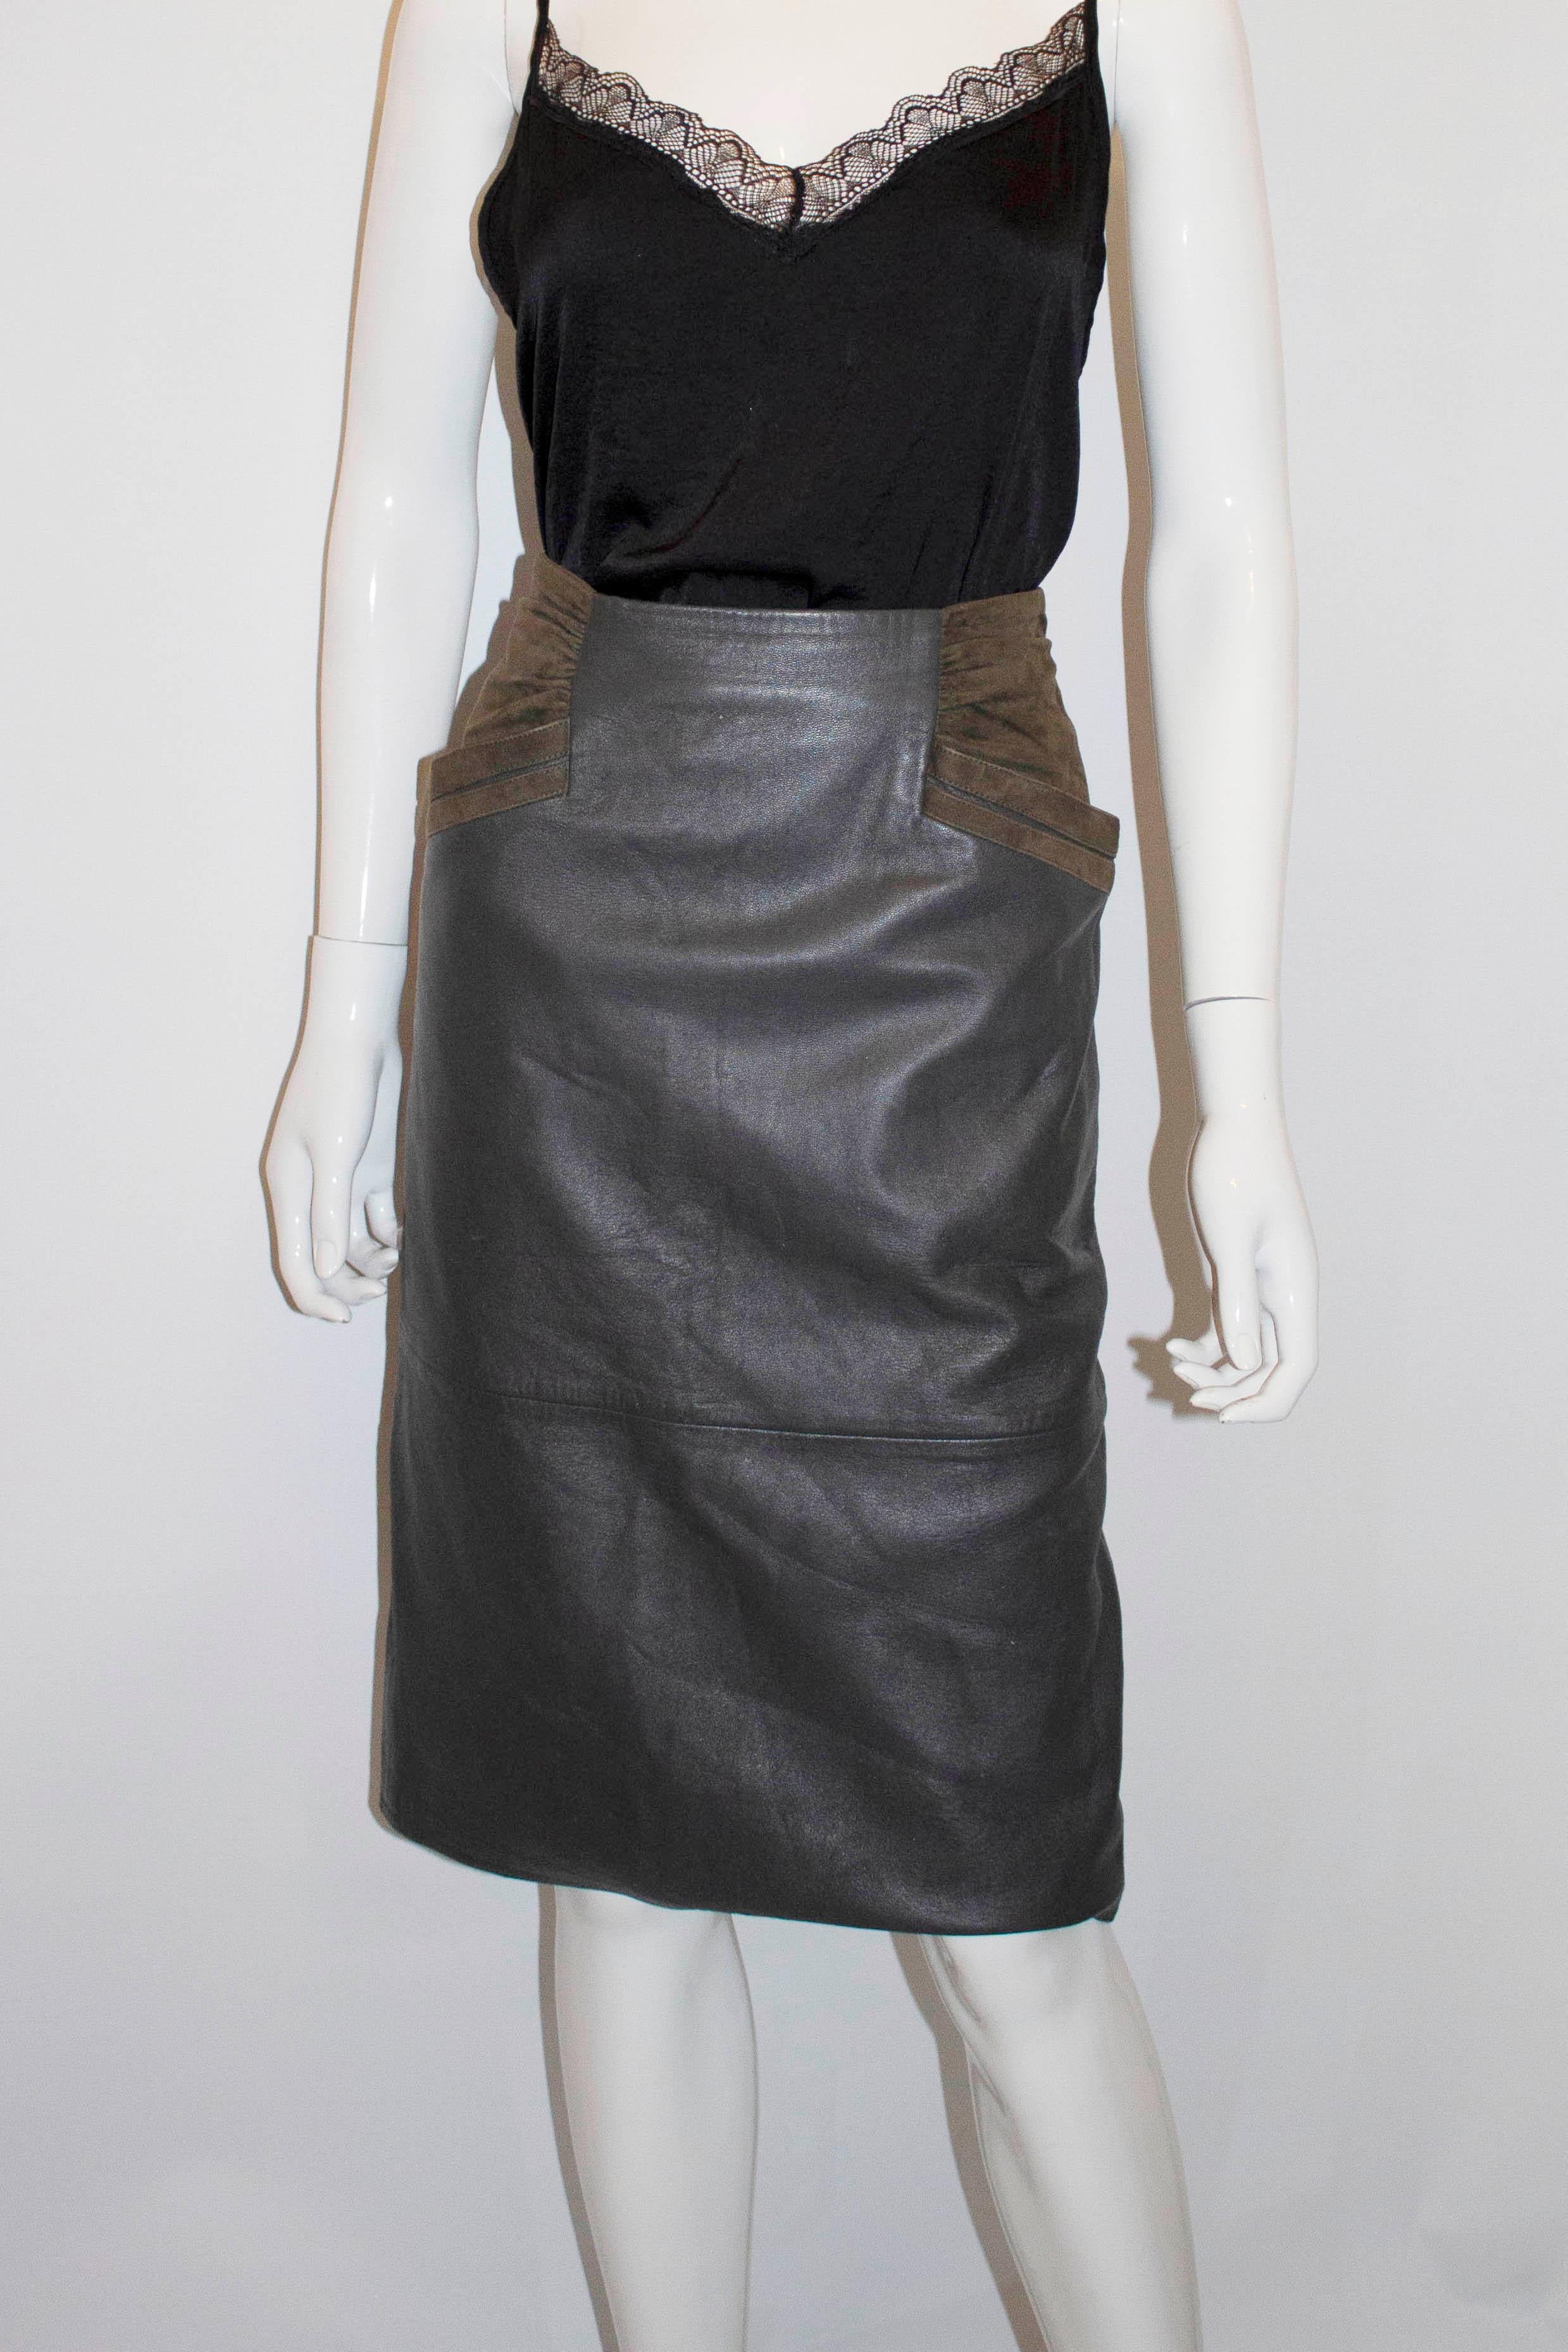 Women's Vintage Leather Skirt by Robert Mariotti